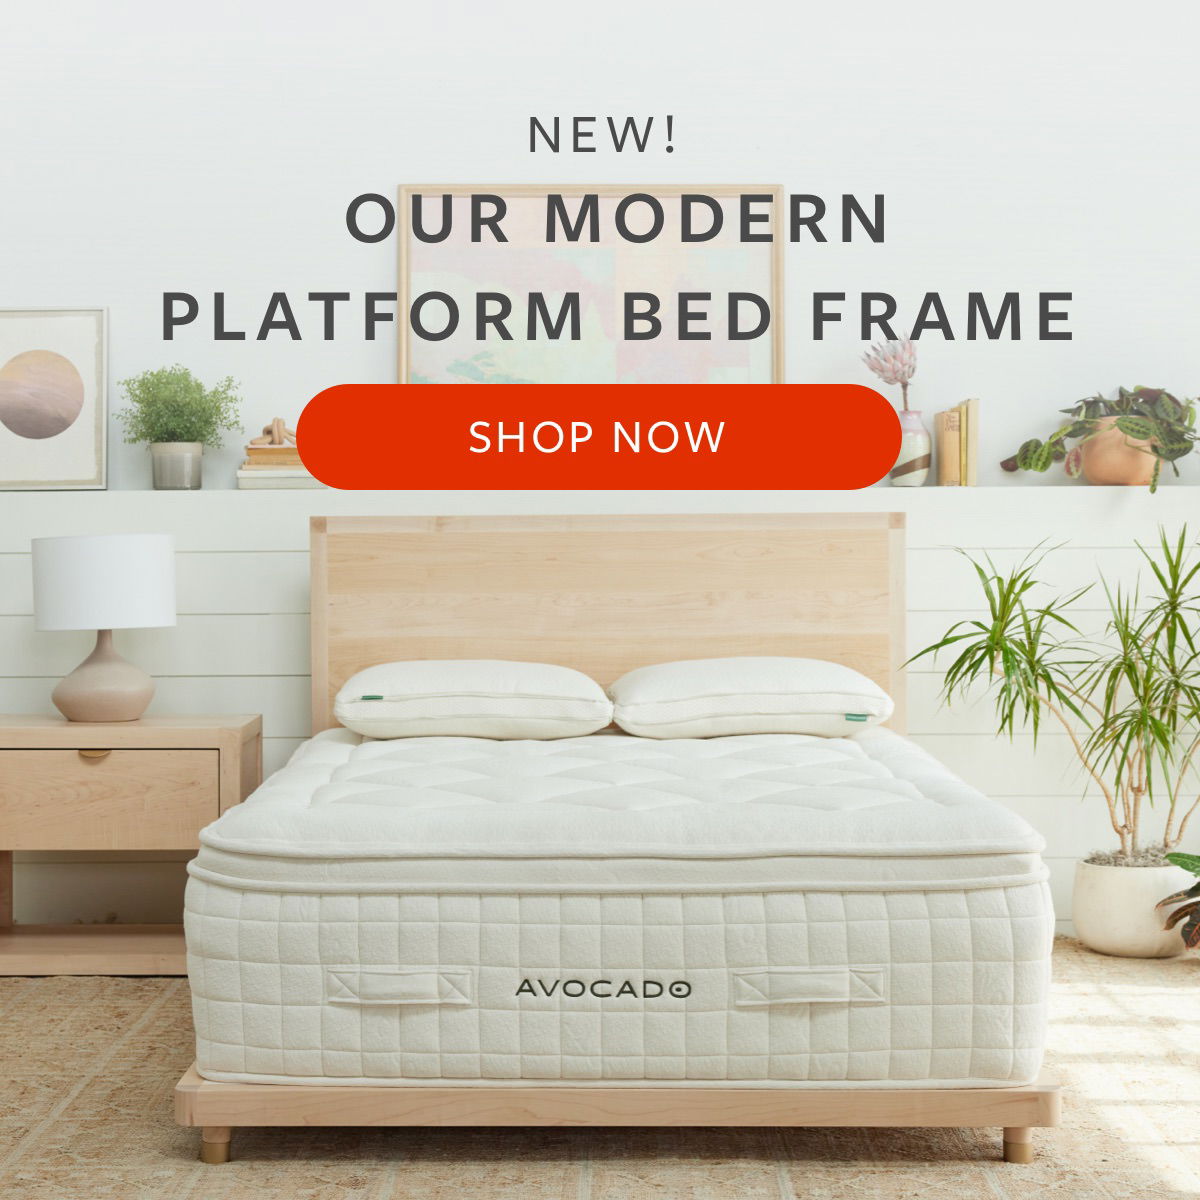 Avocado Mattress: NEW! Our Modern Platform Bed Frame